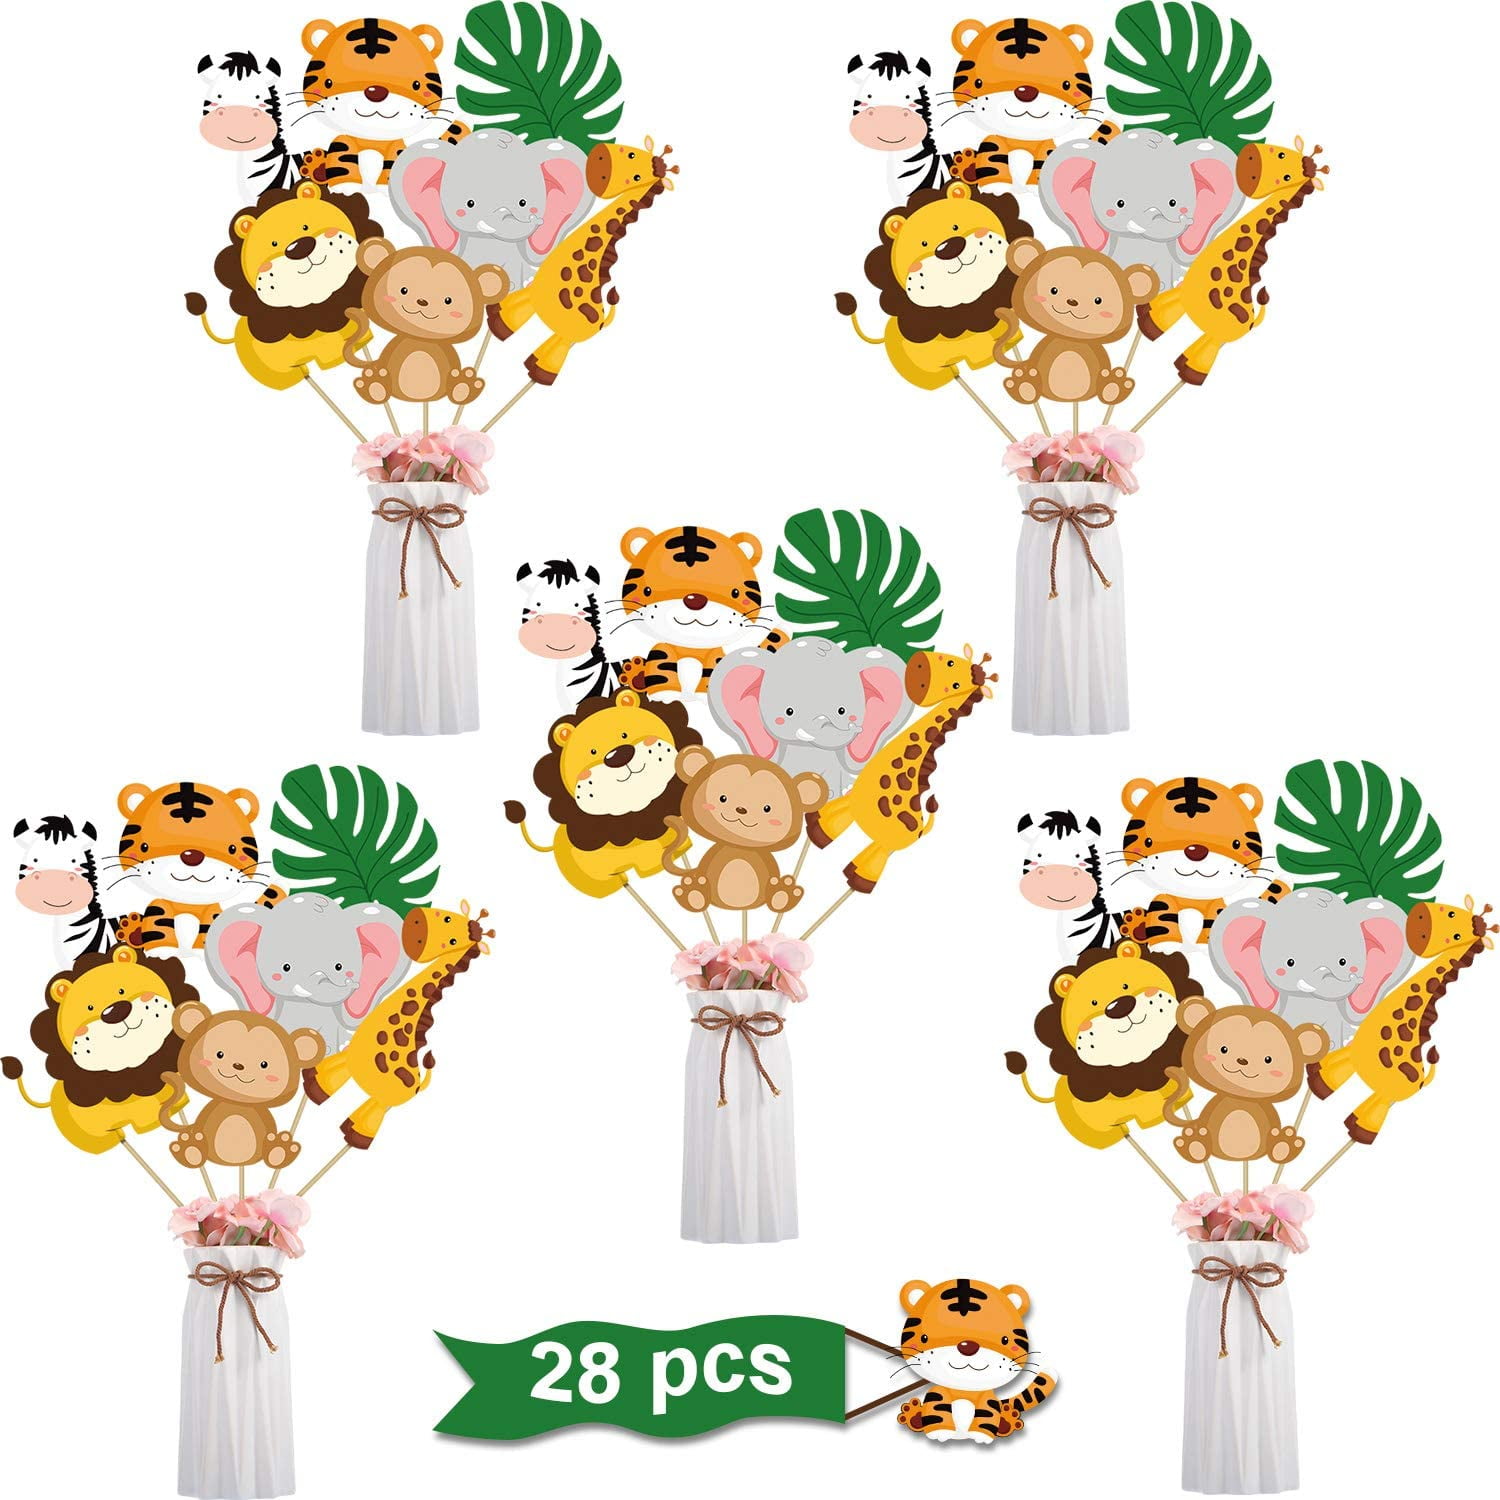 SUNBEAUTY Cake Toppers Jungle Theme Birthday Animals Safari Party Decorations 